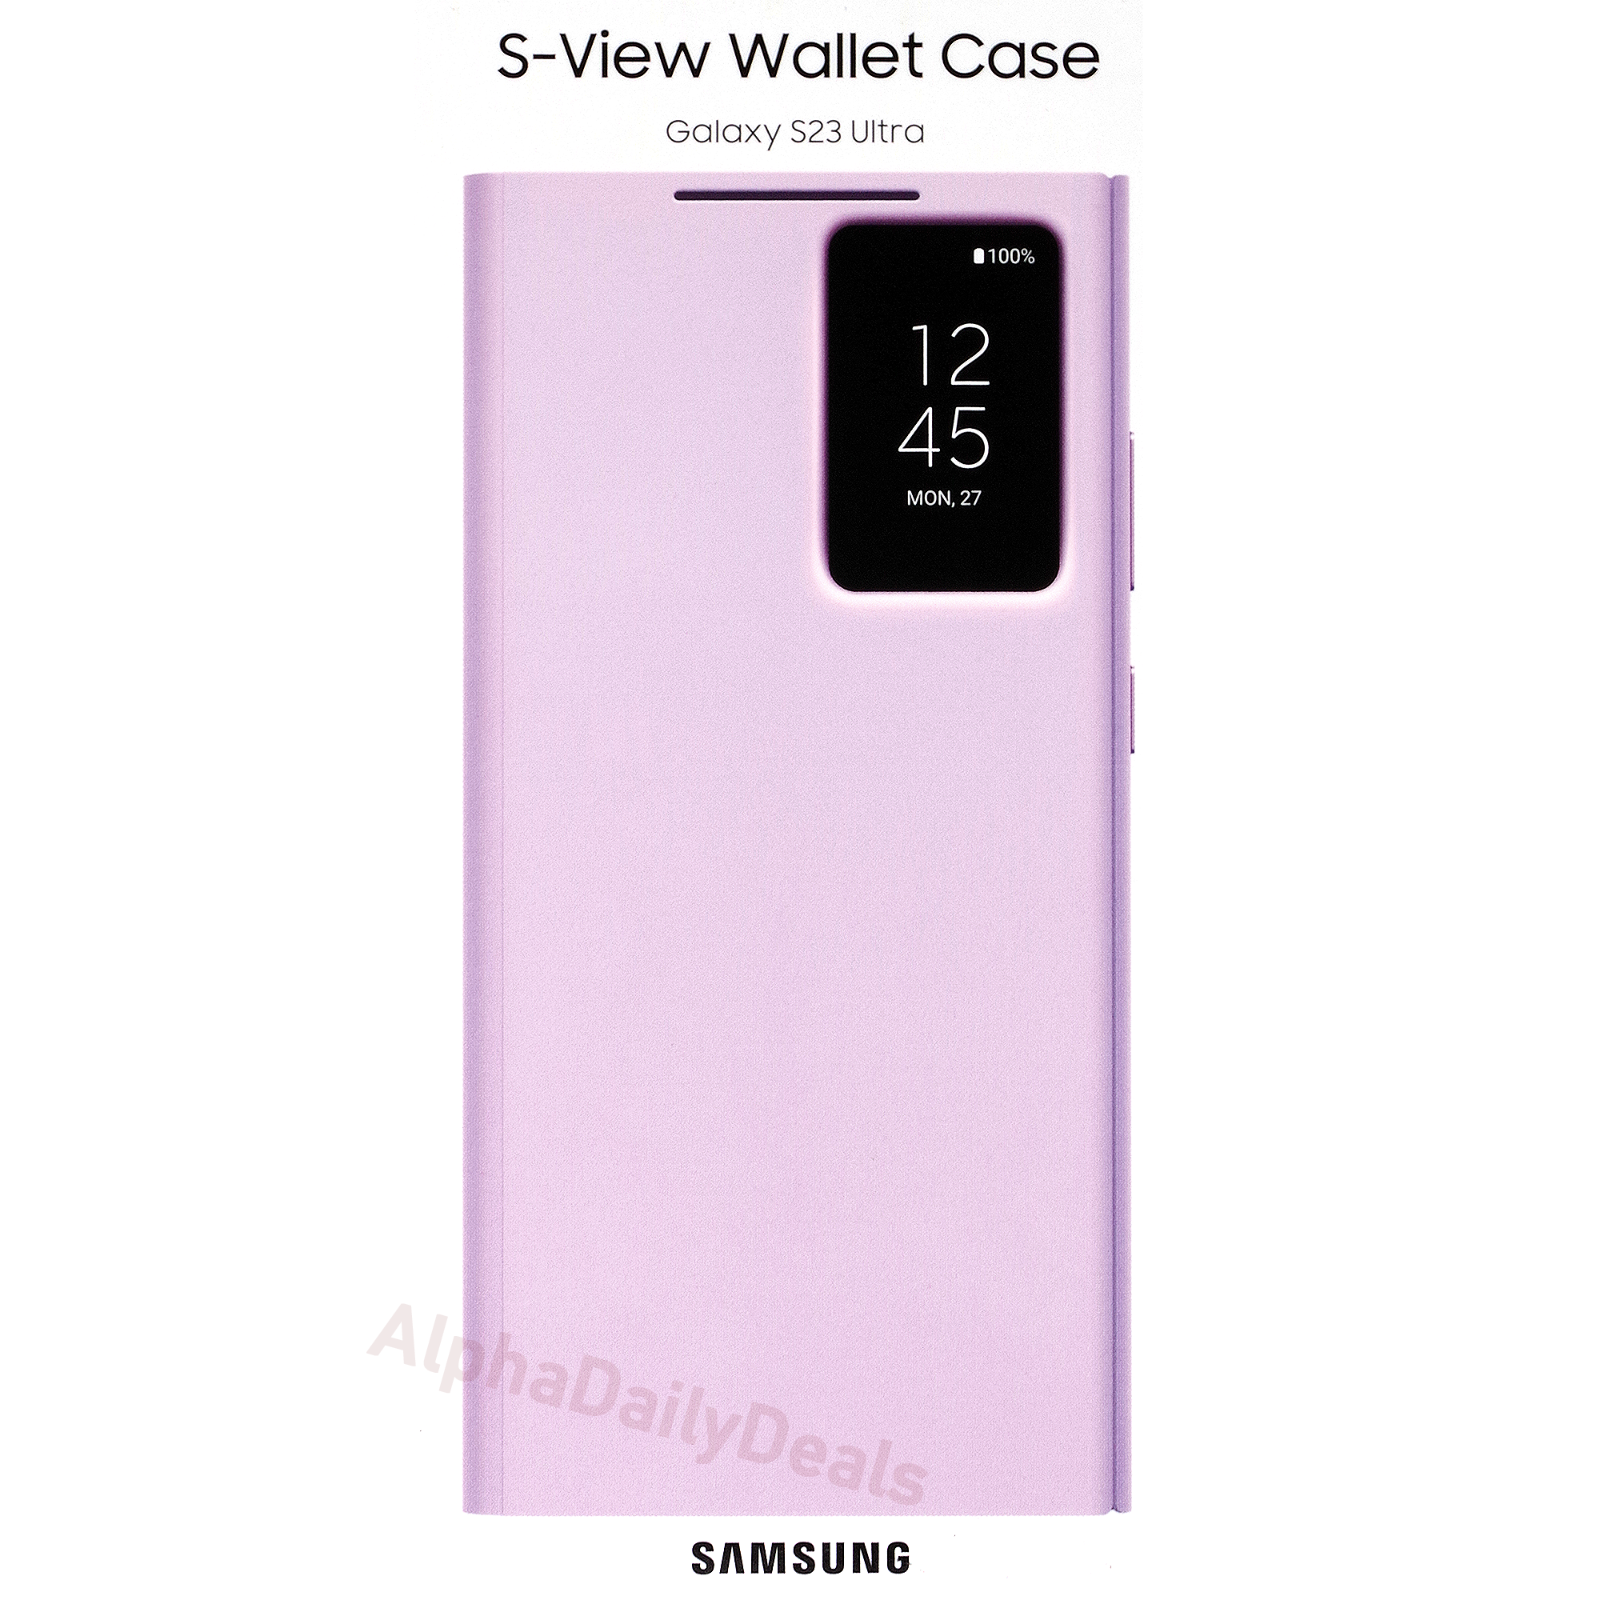 Original Samsung GALAXY S23 ULTRA S-View Wallet Folio Case Lavender